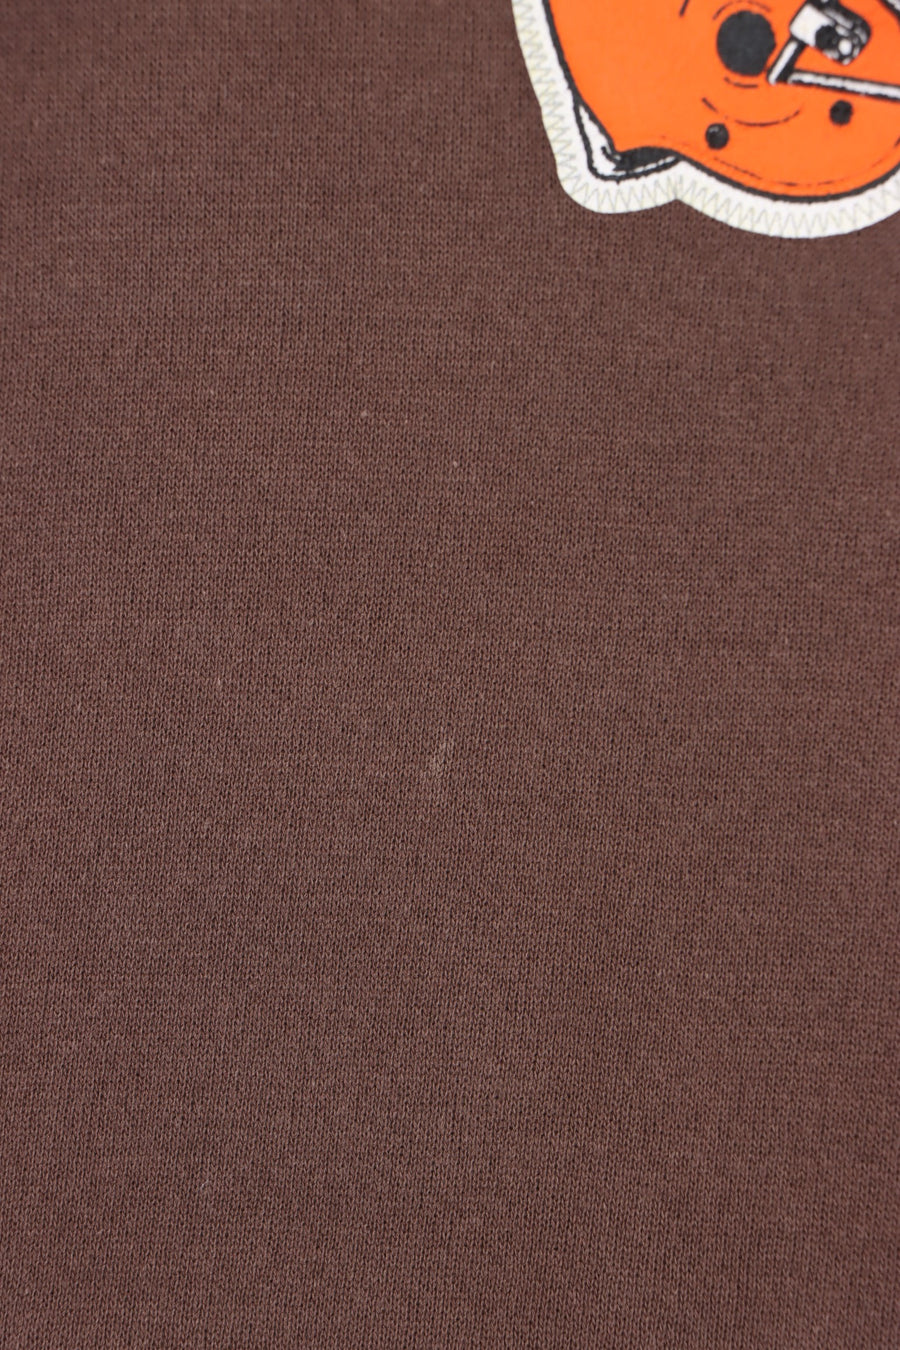 NFL Cleveland Browns Helmet Logo LEE SPORT Printed Sweatshirt (M-L)